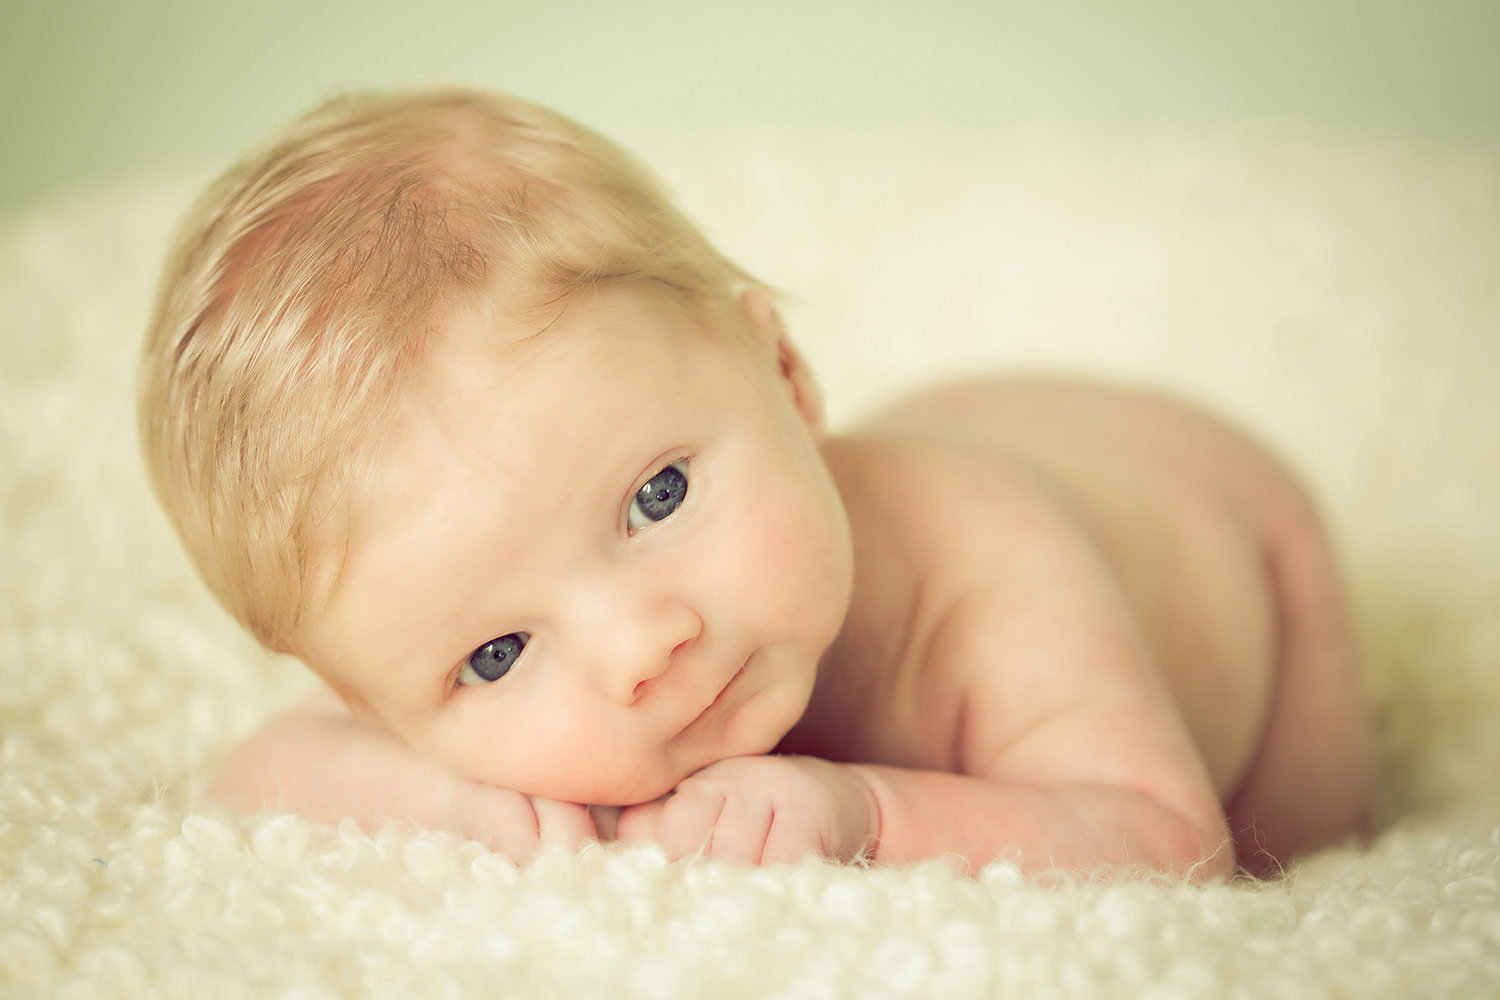 san diego newborn photography | baby boy newborn with big blue eyes and white blanket